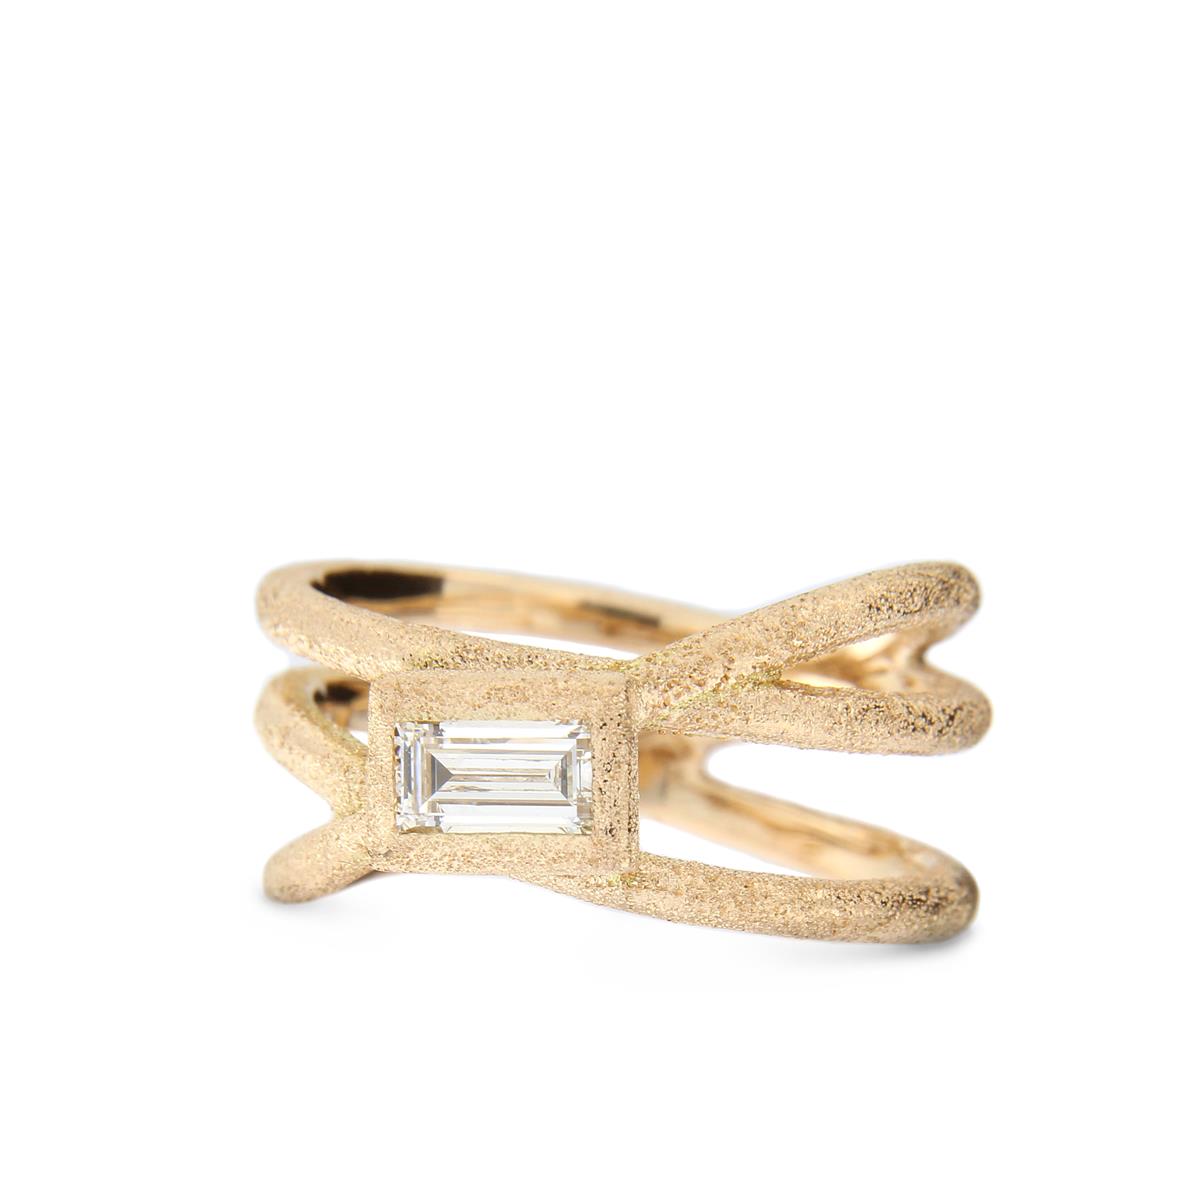 Katie g. Jewellery - Maßanfertigung - Wickelring mit Baguette Diamant V2